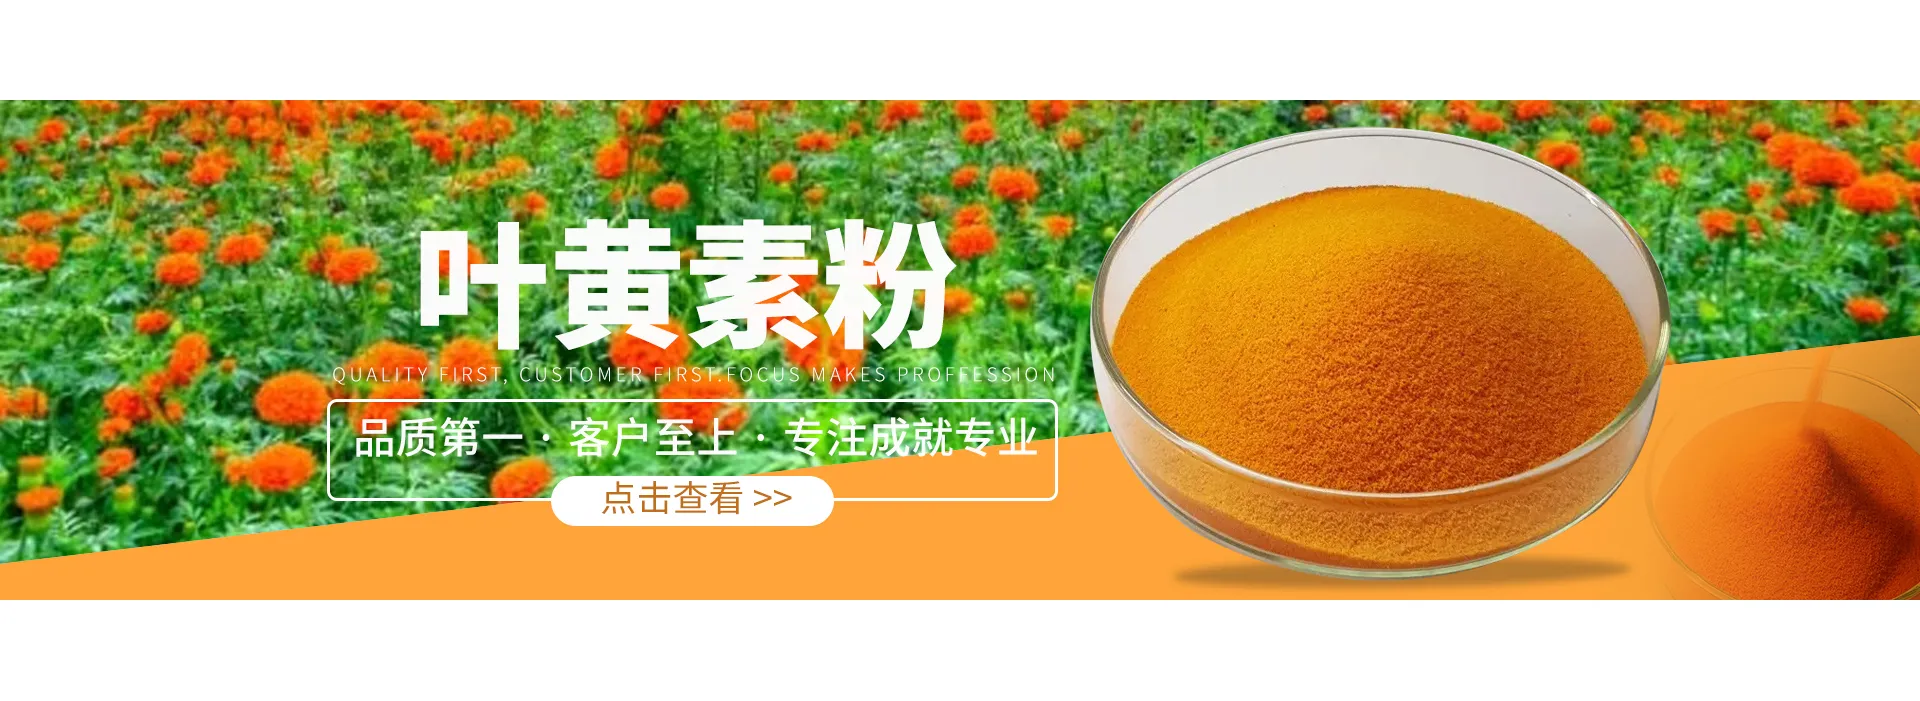 marigold flower extract